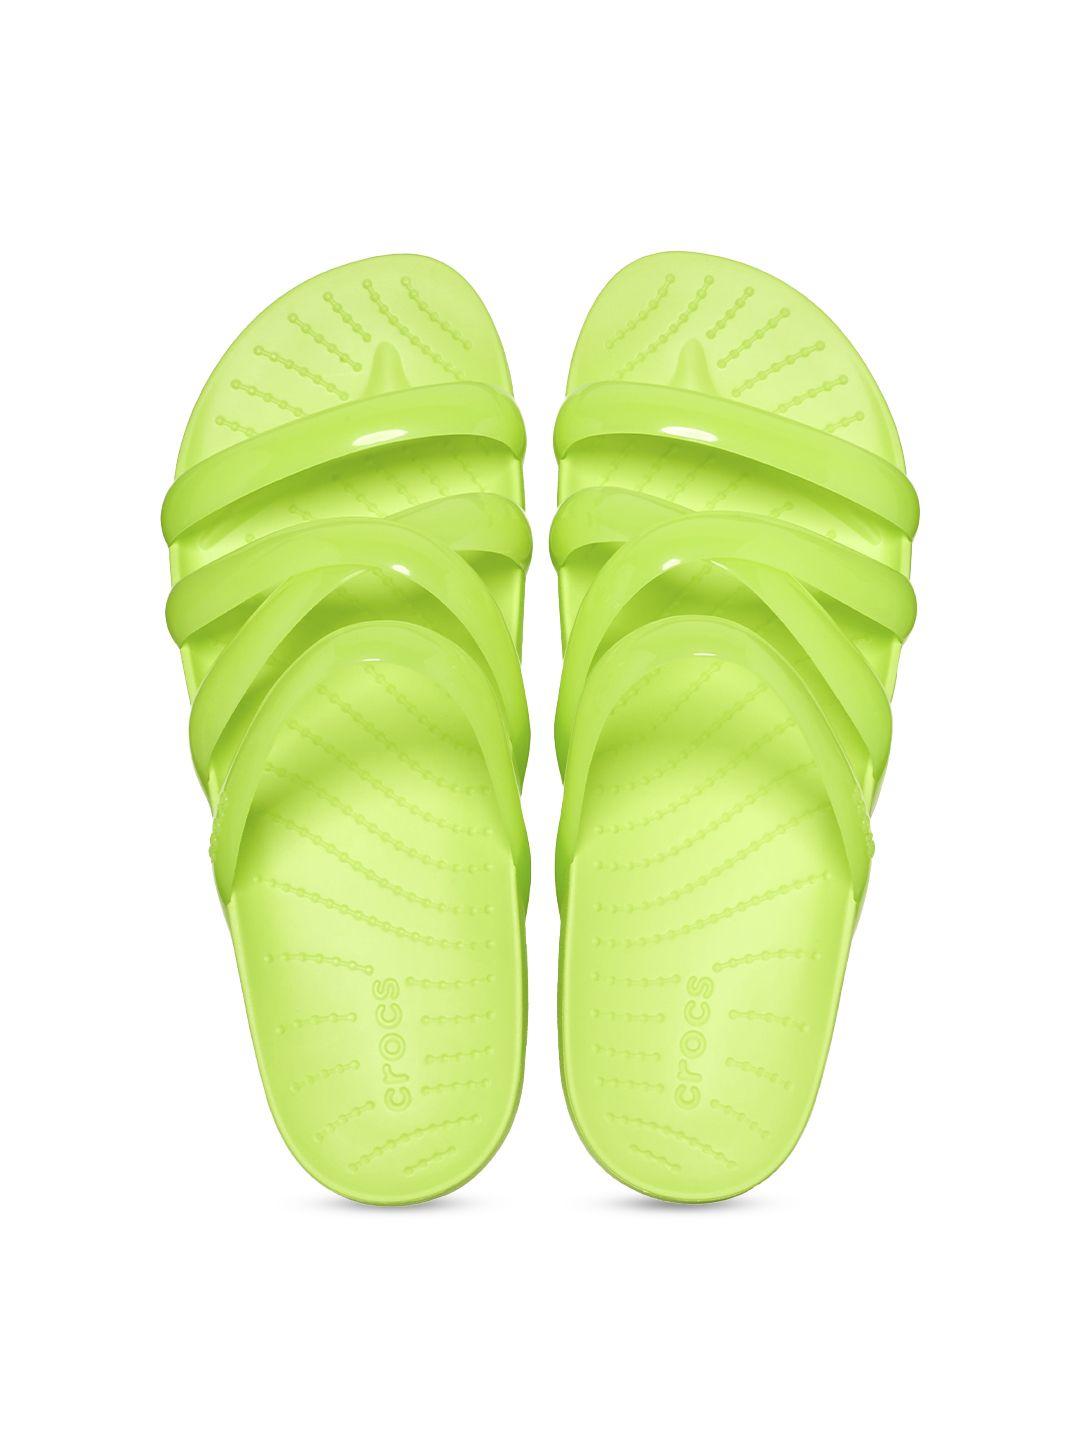 crocs-women-textured-open-toe-flats